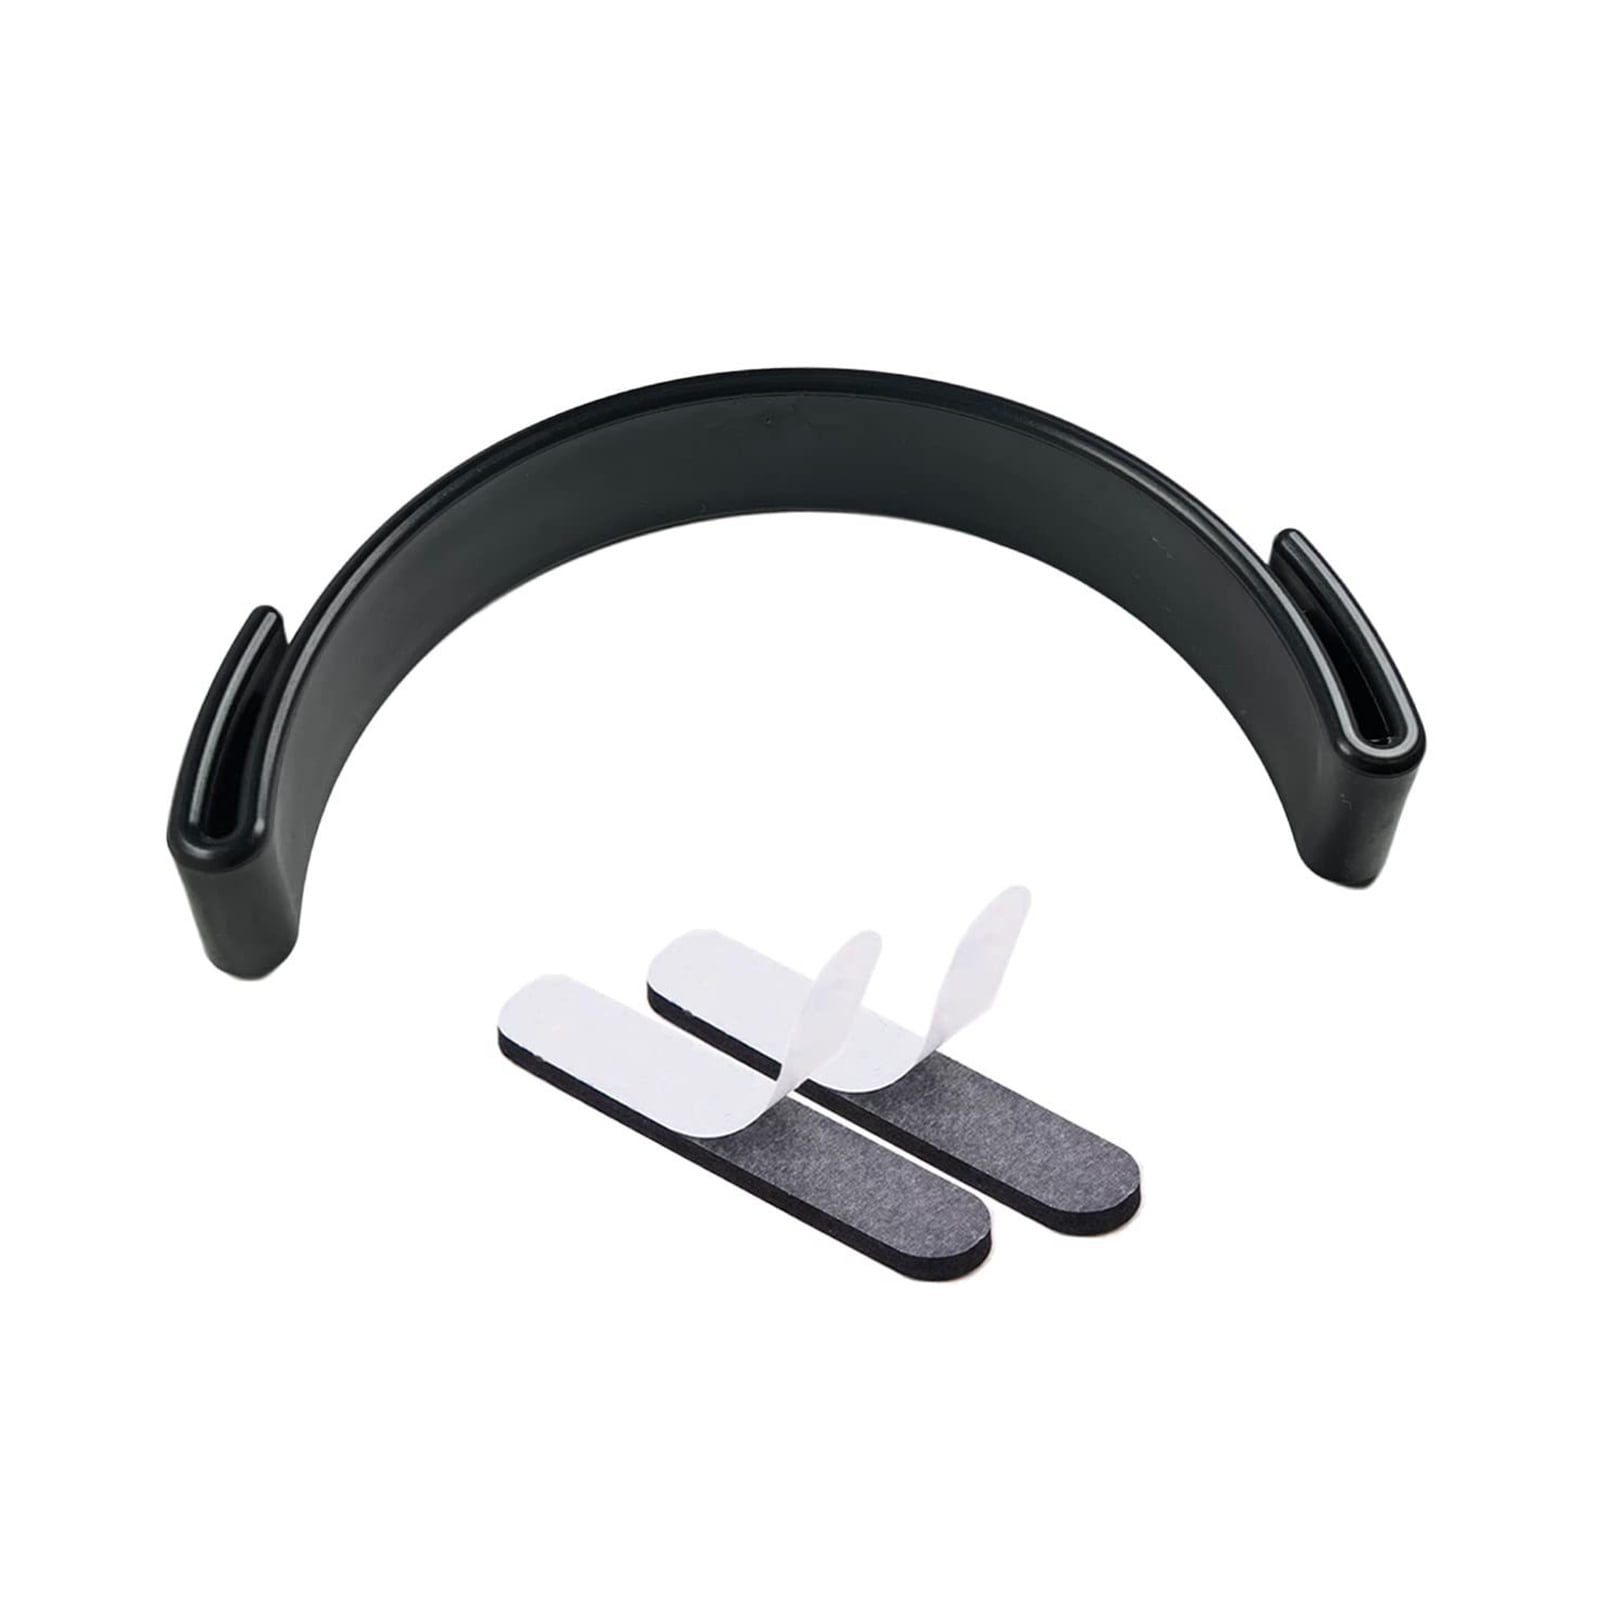 Hat Brim Retainer Durable Plastic Hat Curving Band Professional Hat Shaper  Design with Dual Option for Shop 5PC - AliExpress